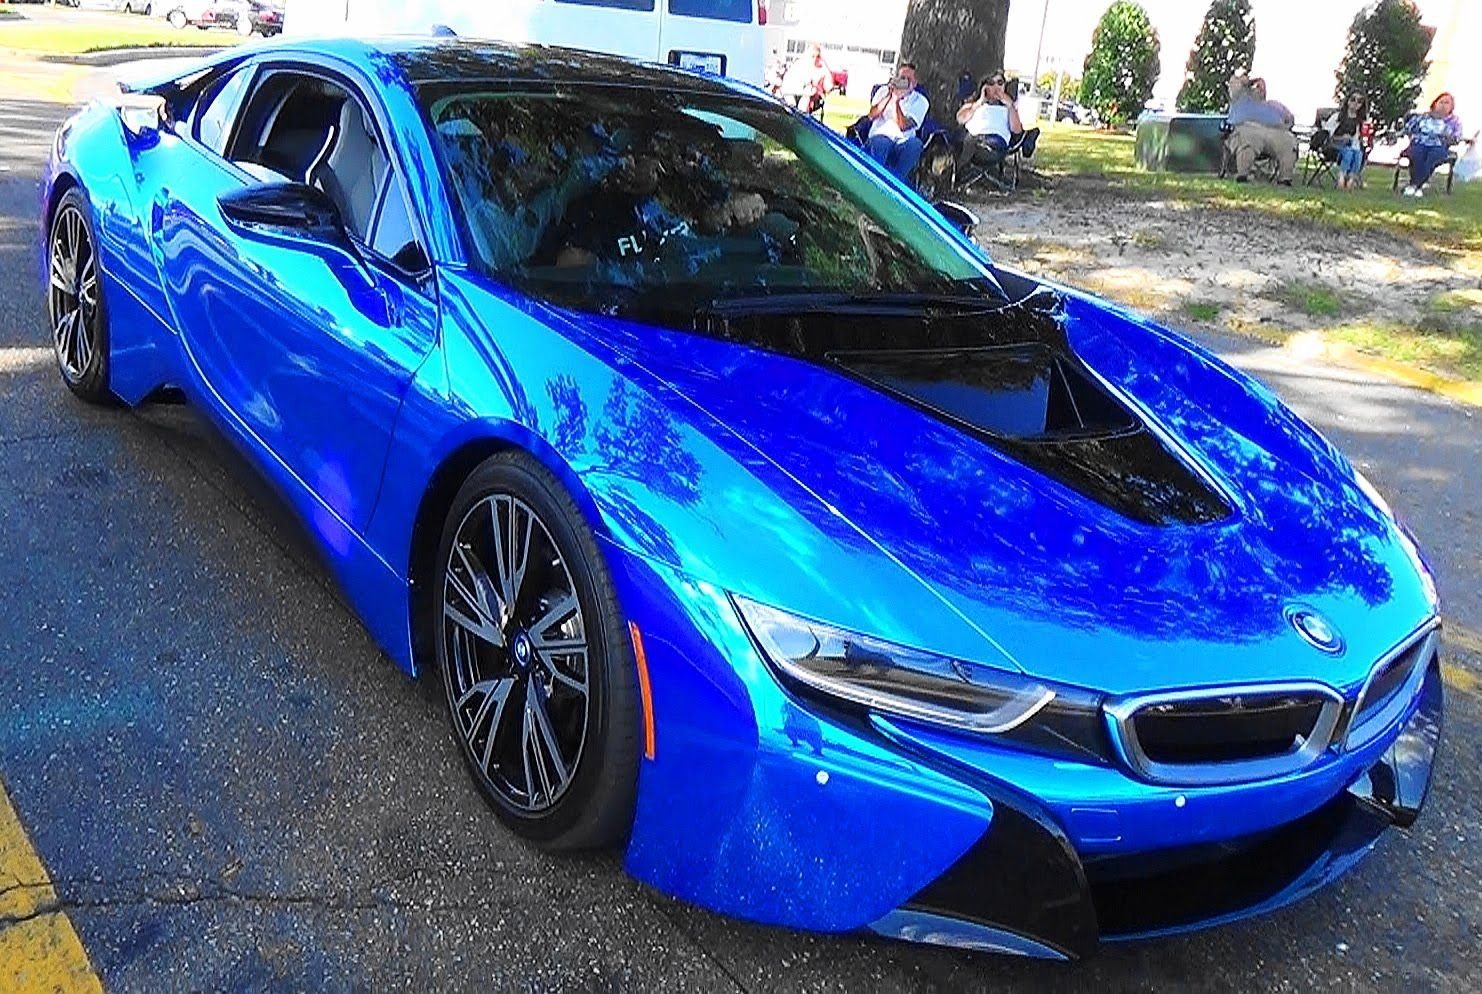 Видео машин цвета. BMW i8 синяя. БМВ ай 8 синяя. BMW спортивная i8 синяя. BMW i8 градиент.